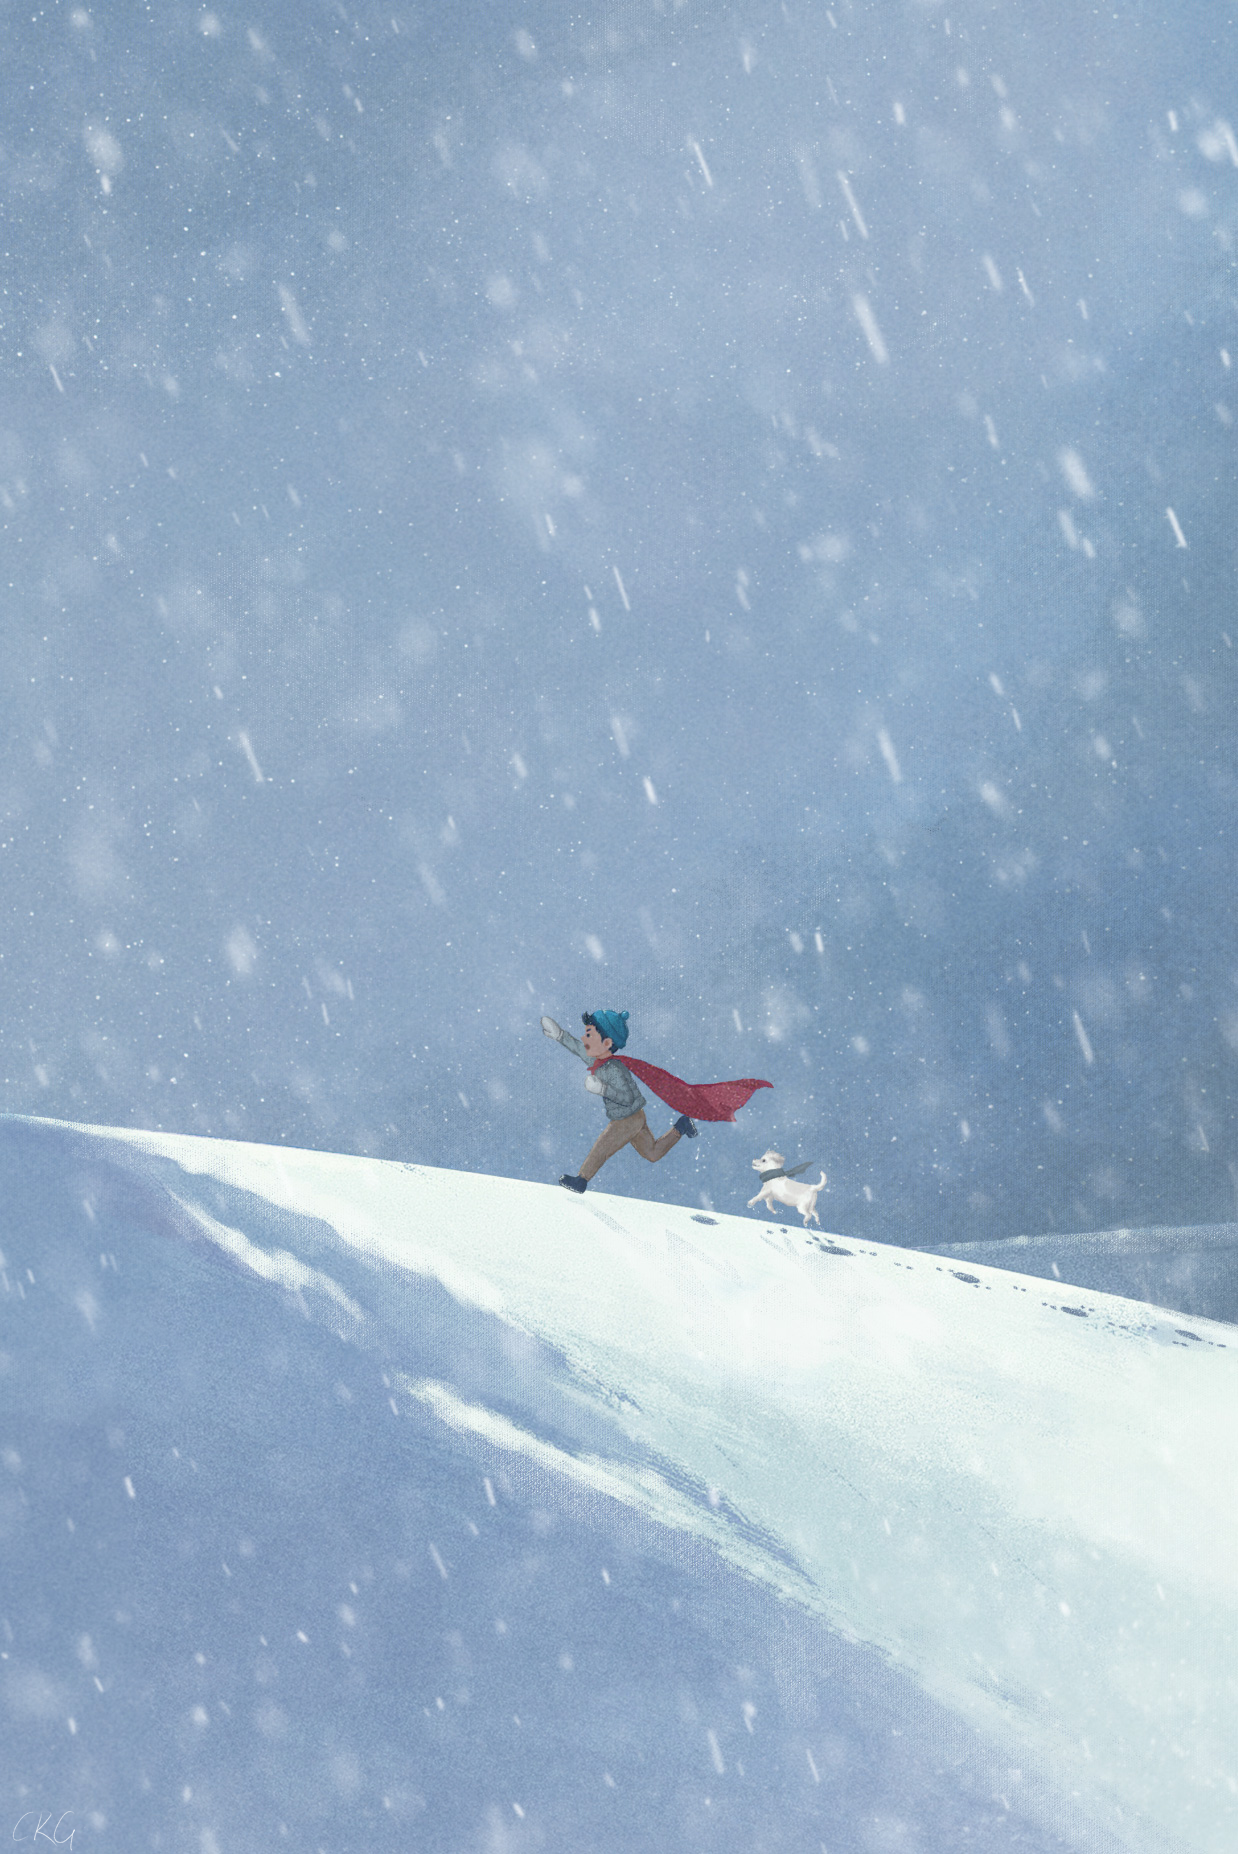 Anime 1238x1854 digital art anime anime boys dog outdoors nature field sky winter snow running